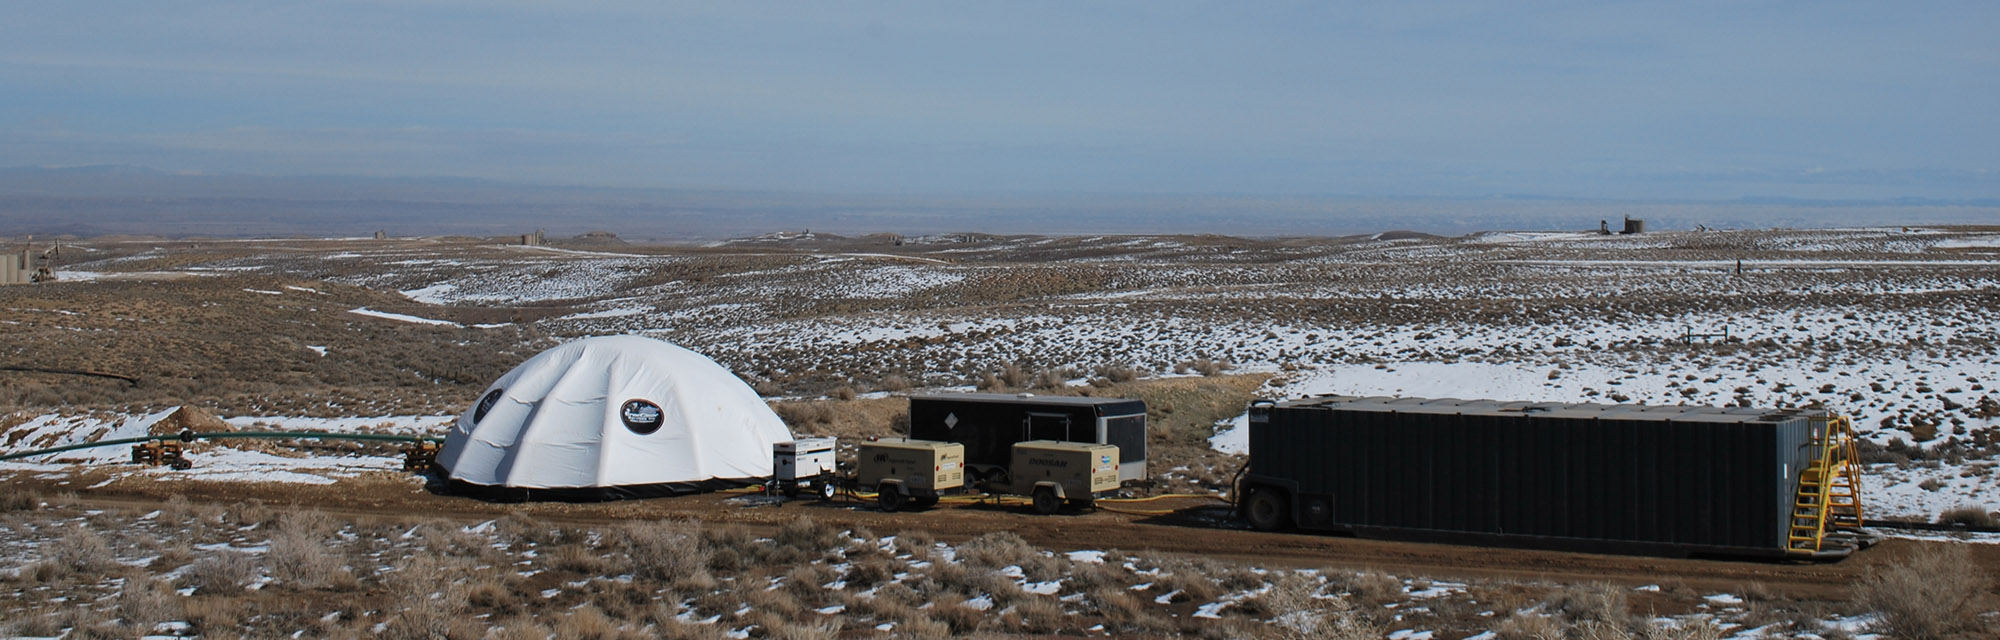 enerclear tent on plateau